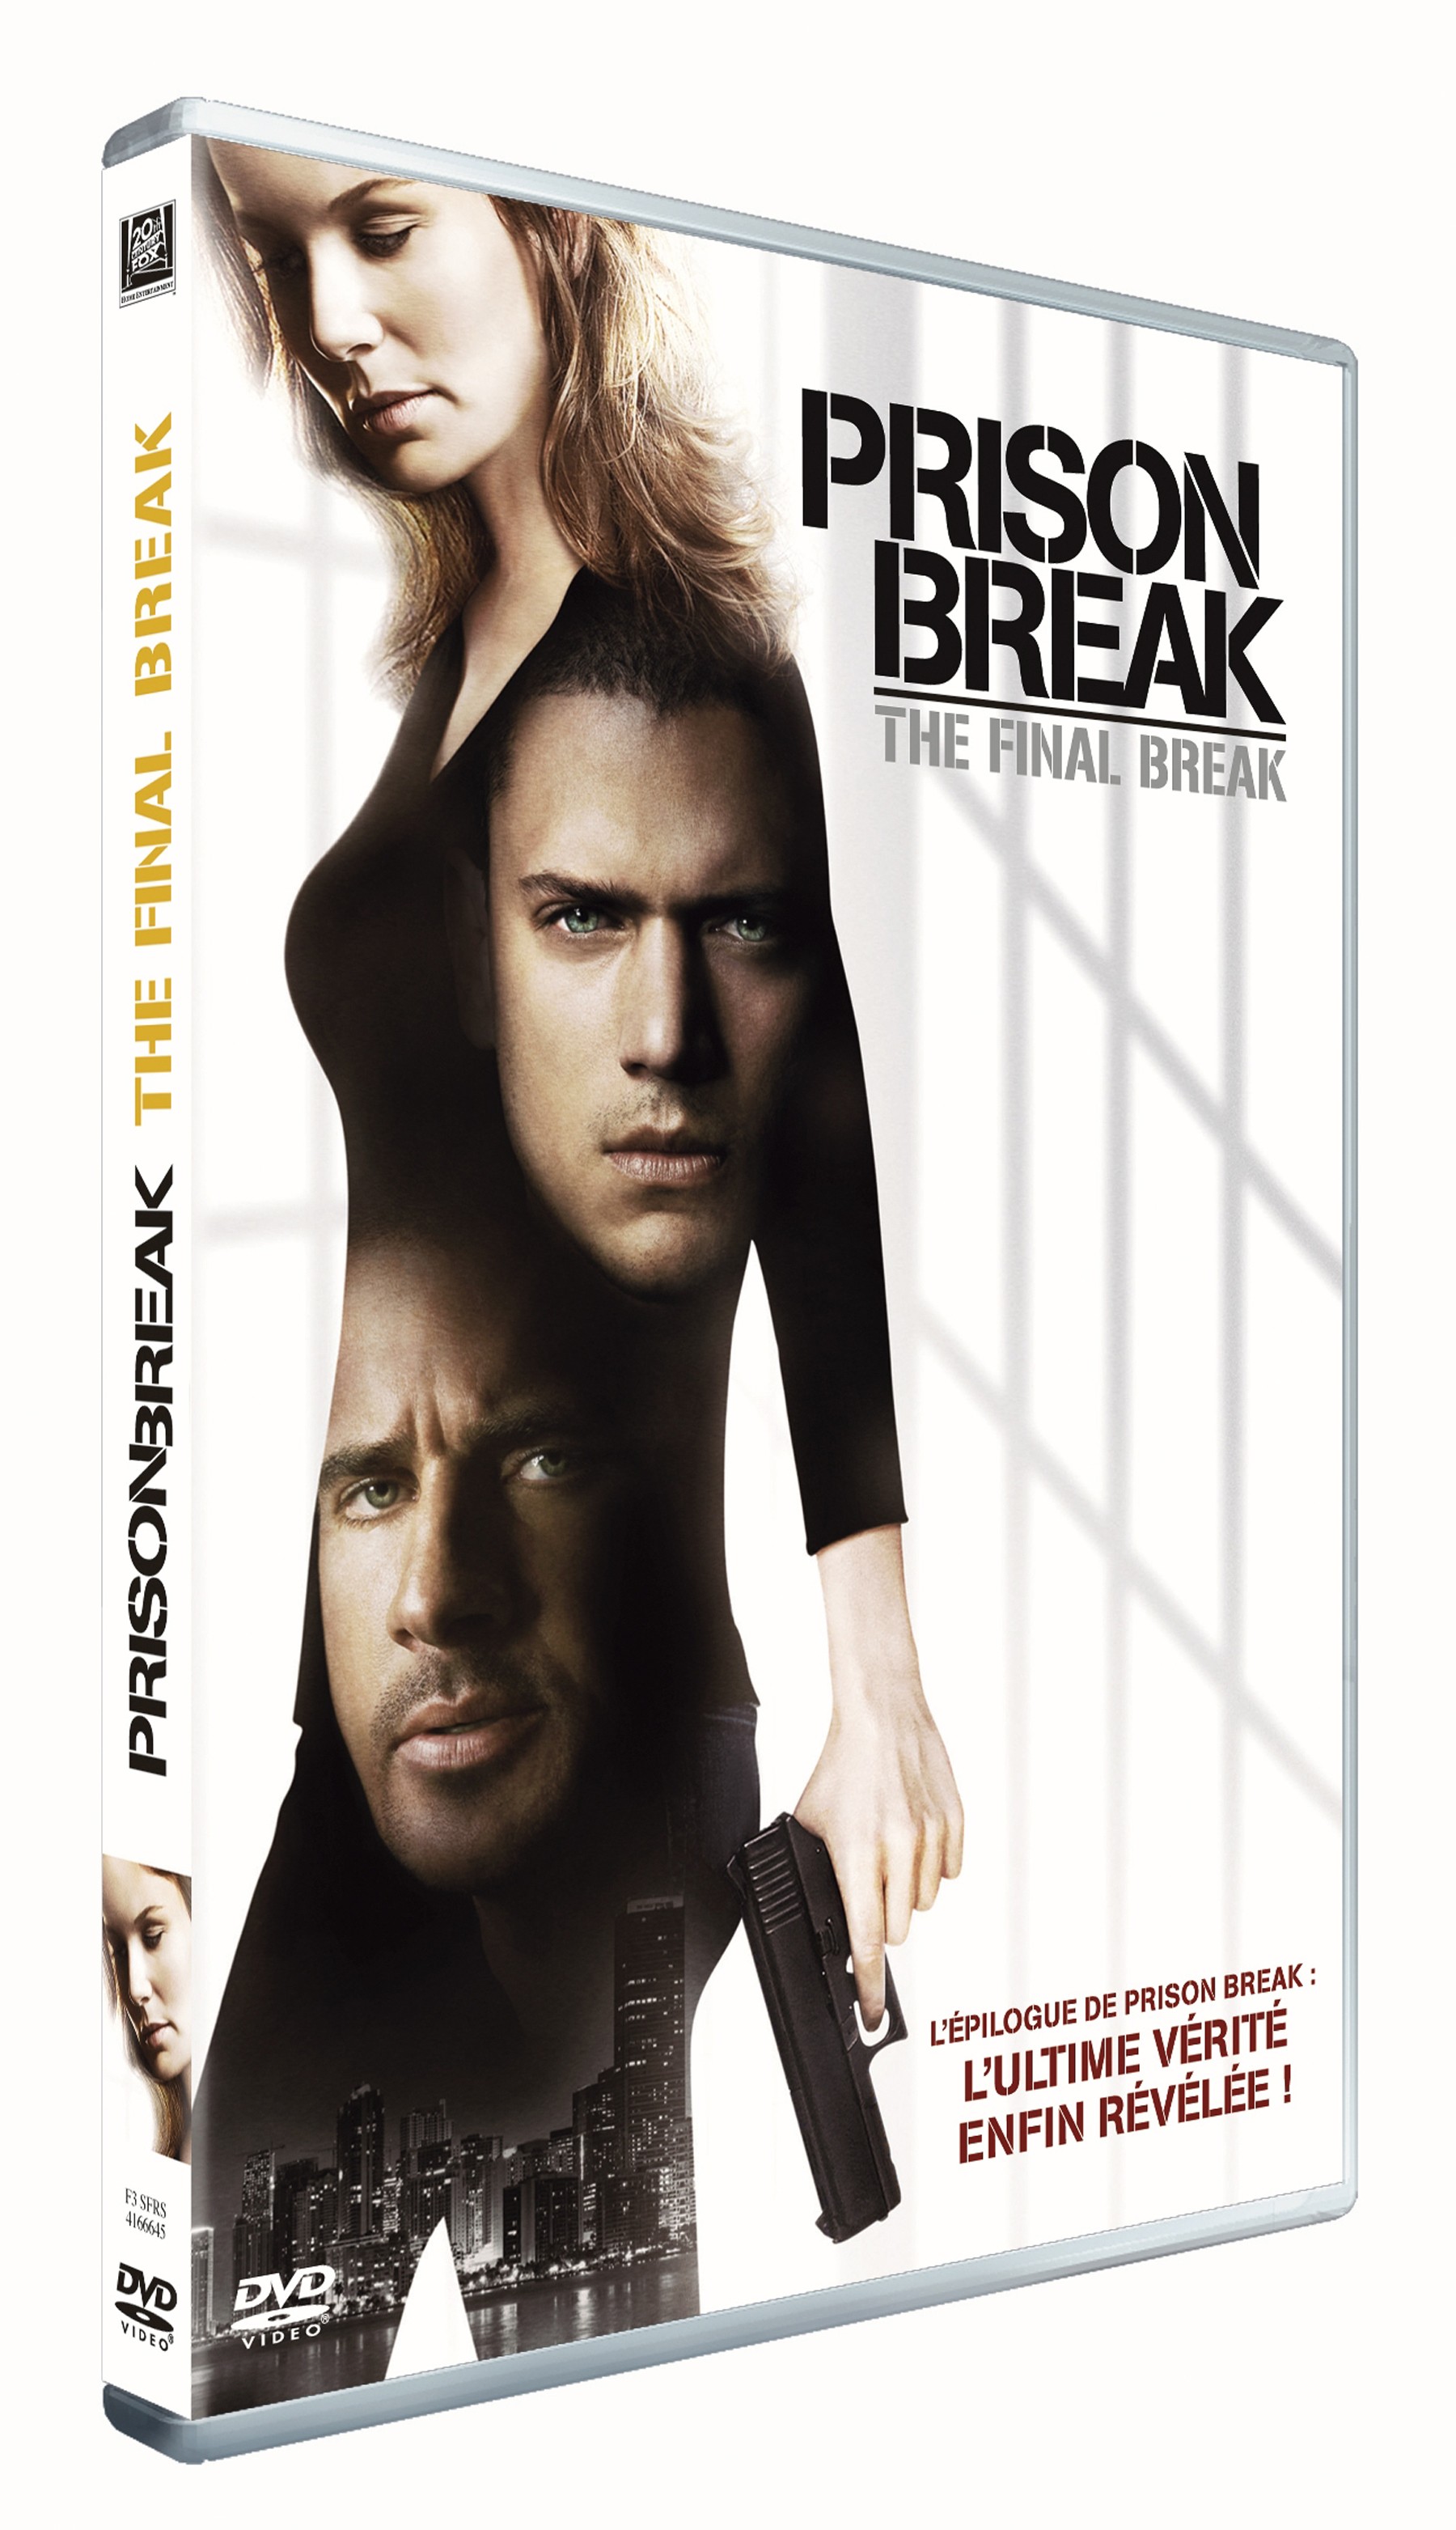 Final break. Побег (DVD). Побег из тюрьмы. Prison Break продолжение. Книги про побег из тюрьмы.